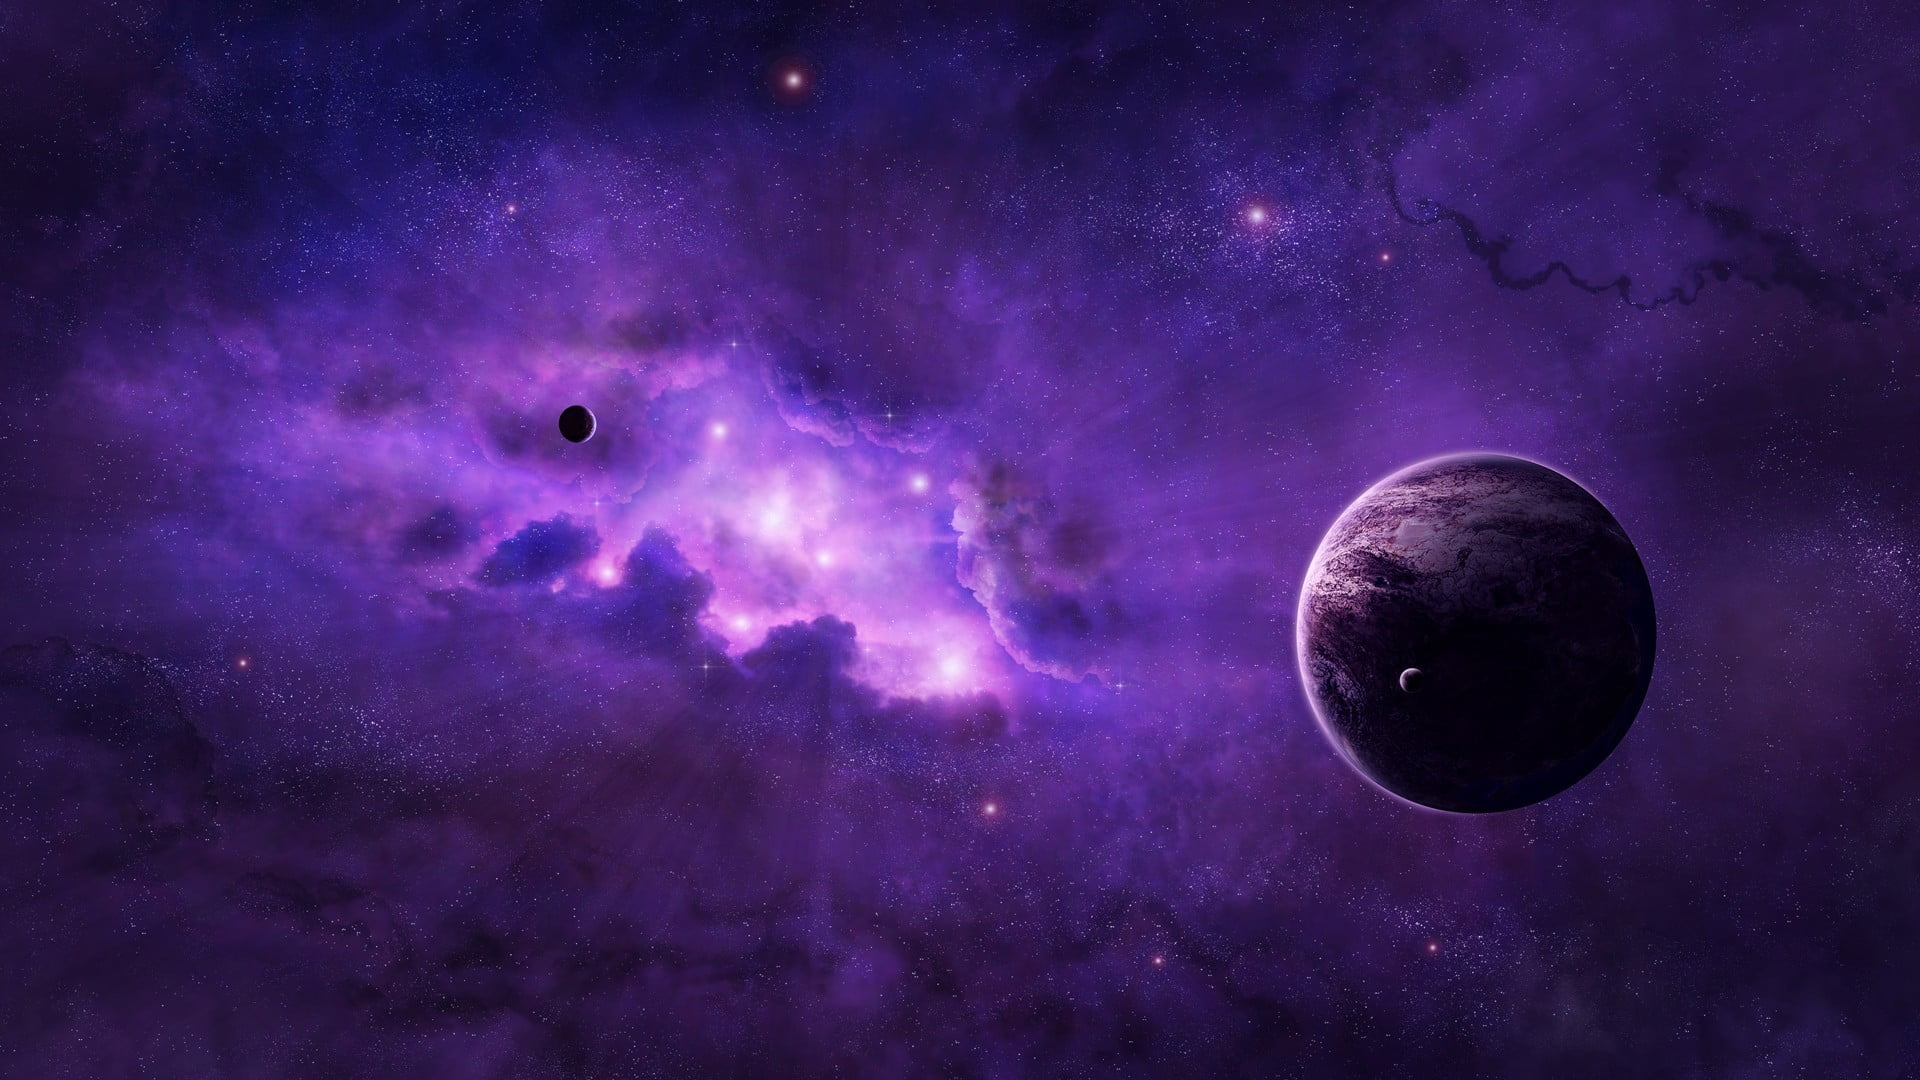 purple sky, space, planet, space art, purple